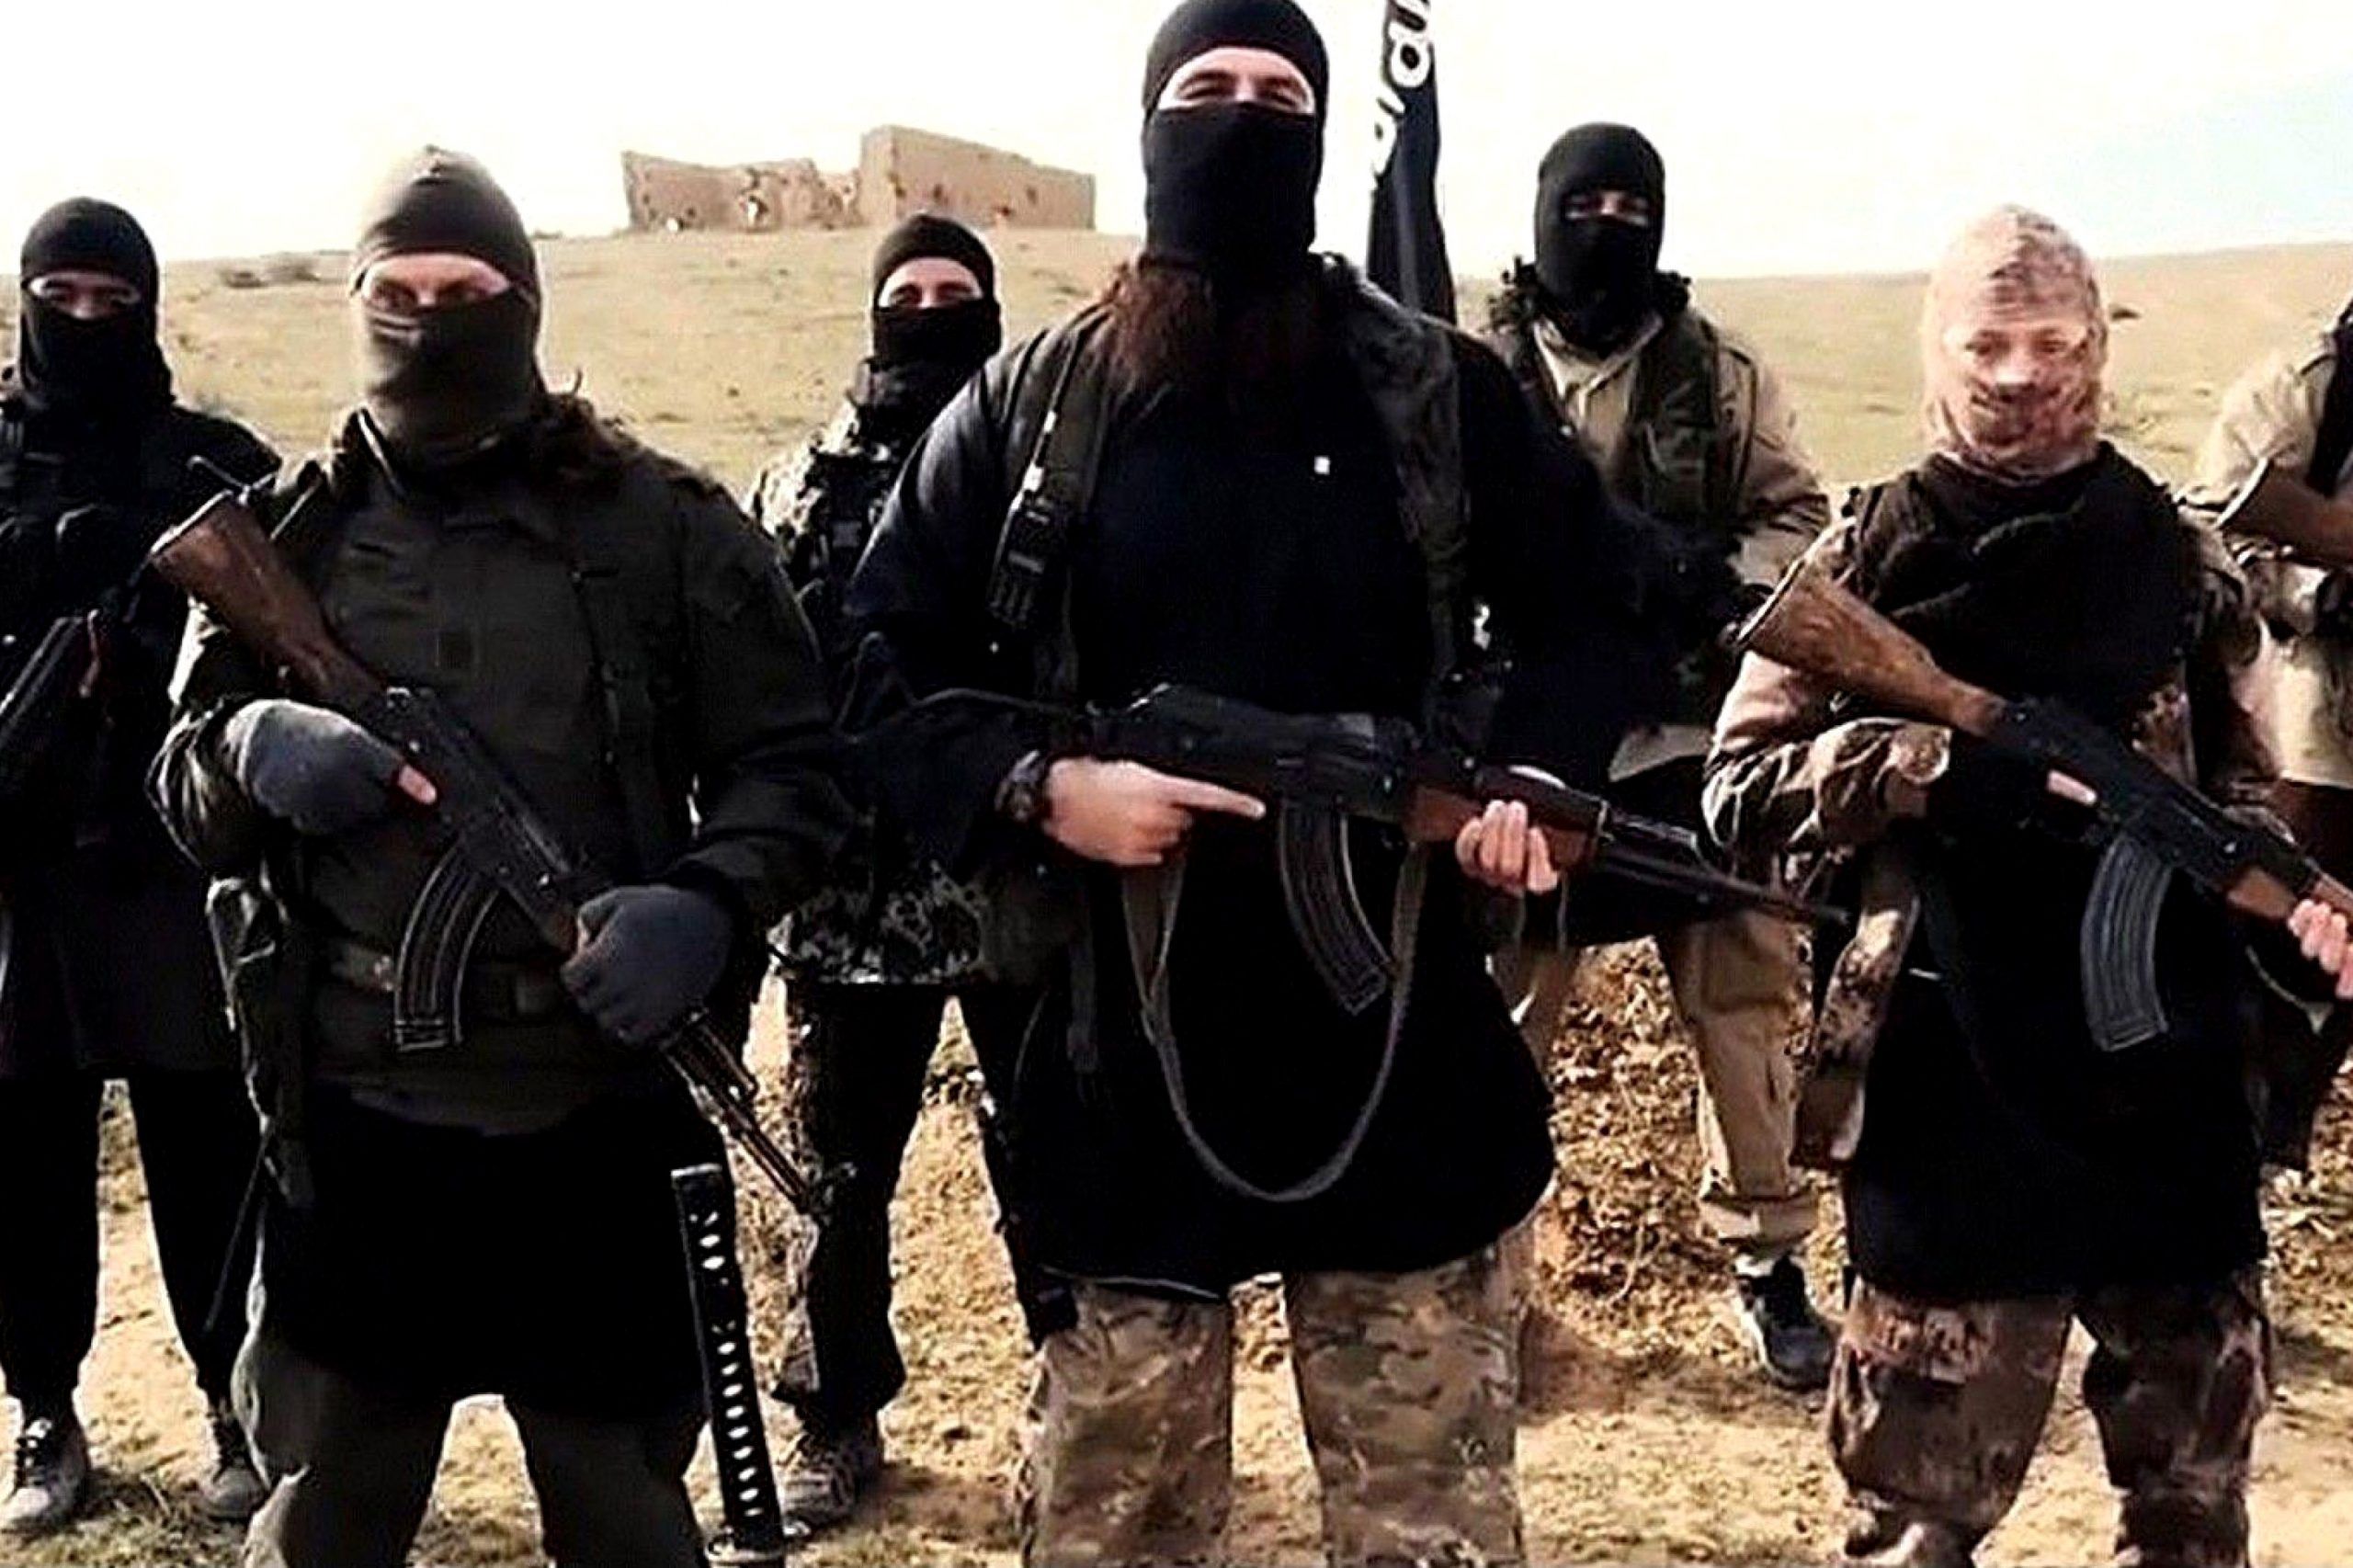 Hayat Boumeddiene 'appears in Islamic State film' 06 Feb 2015